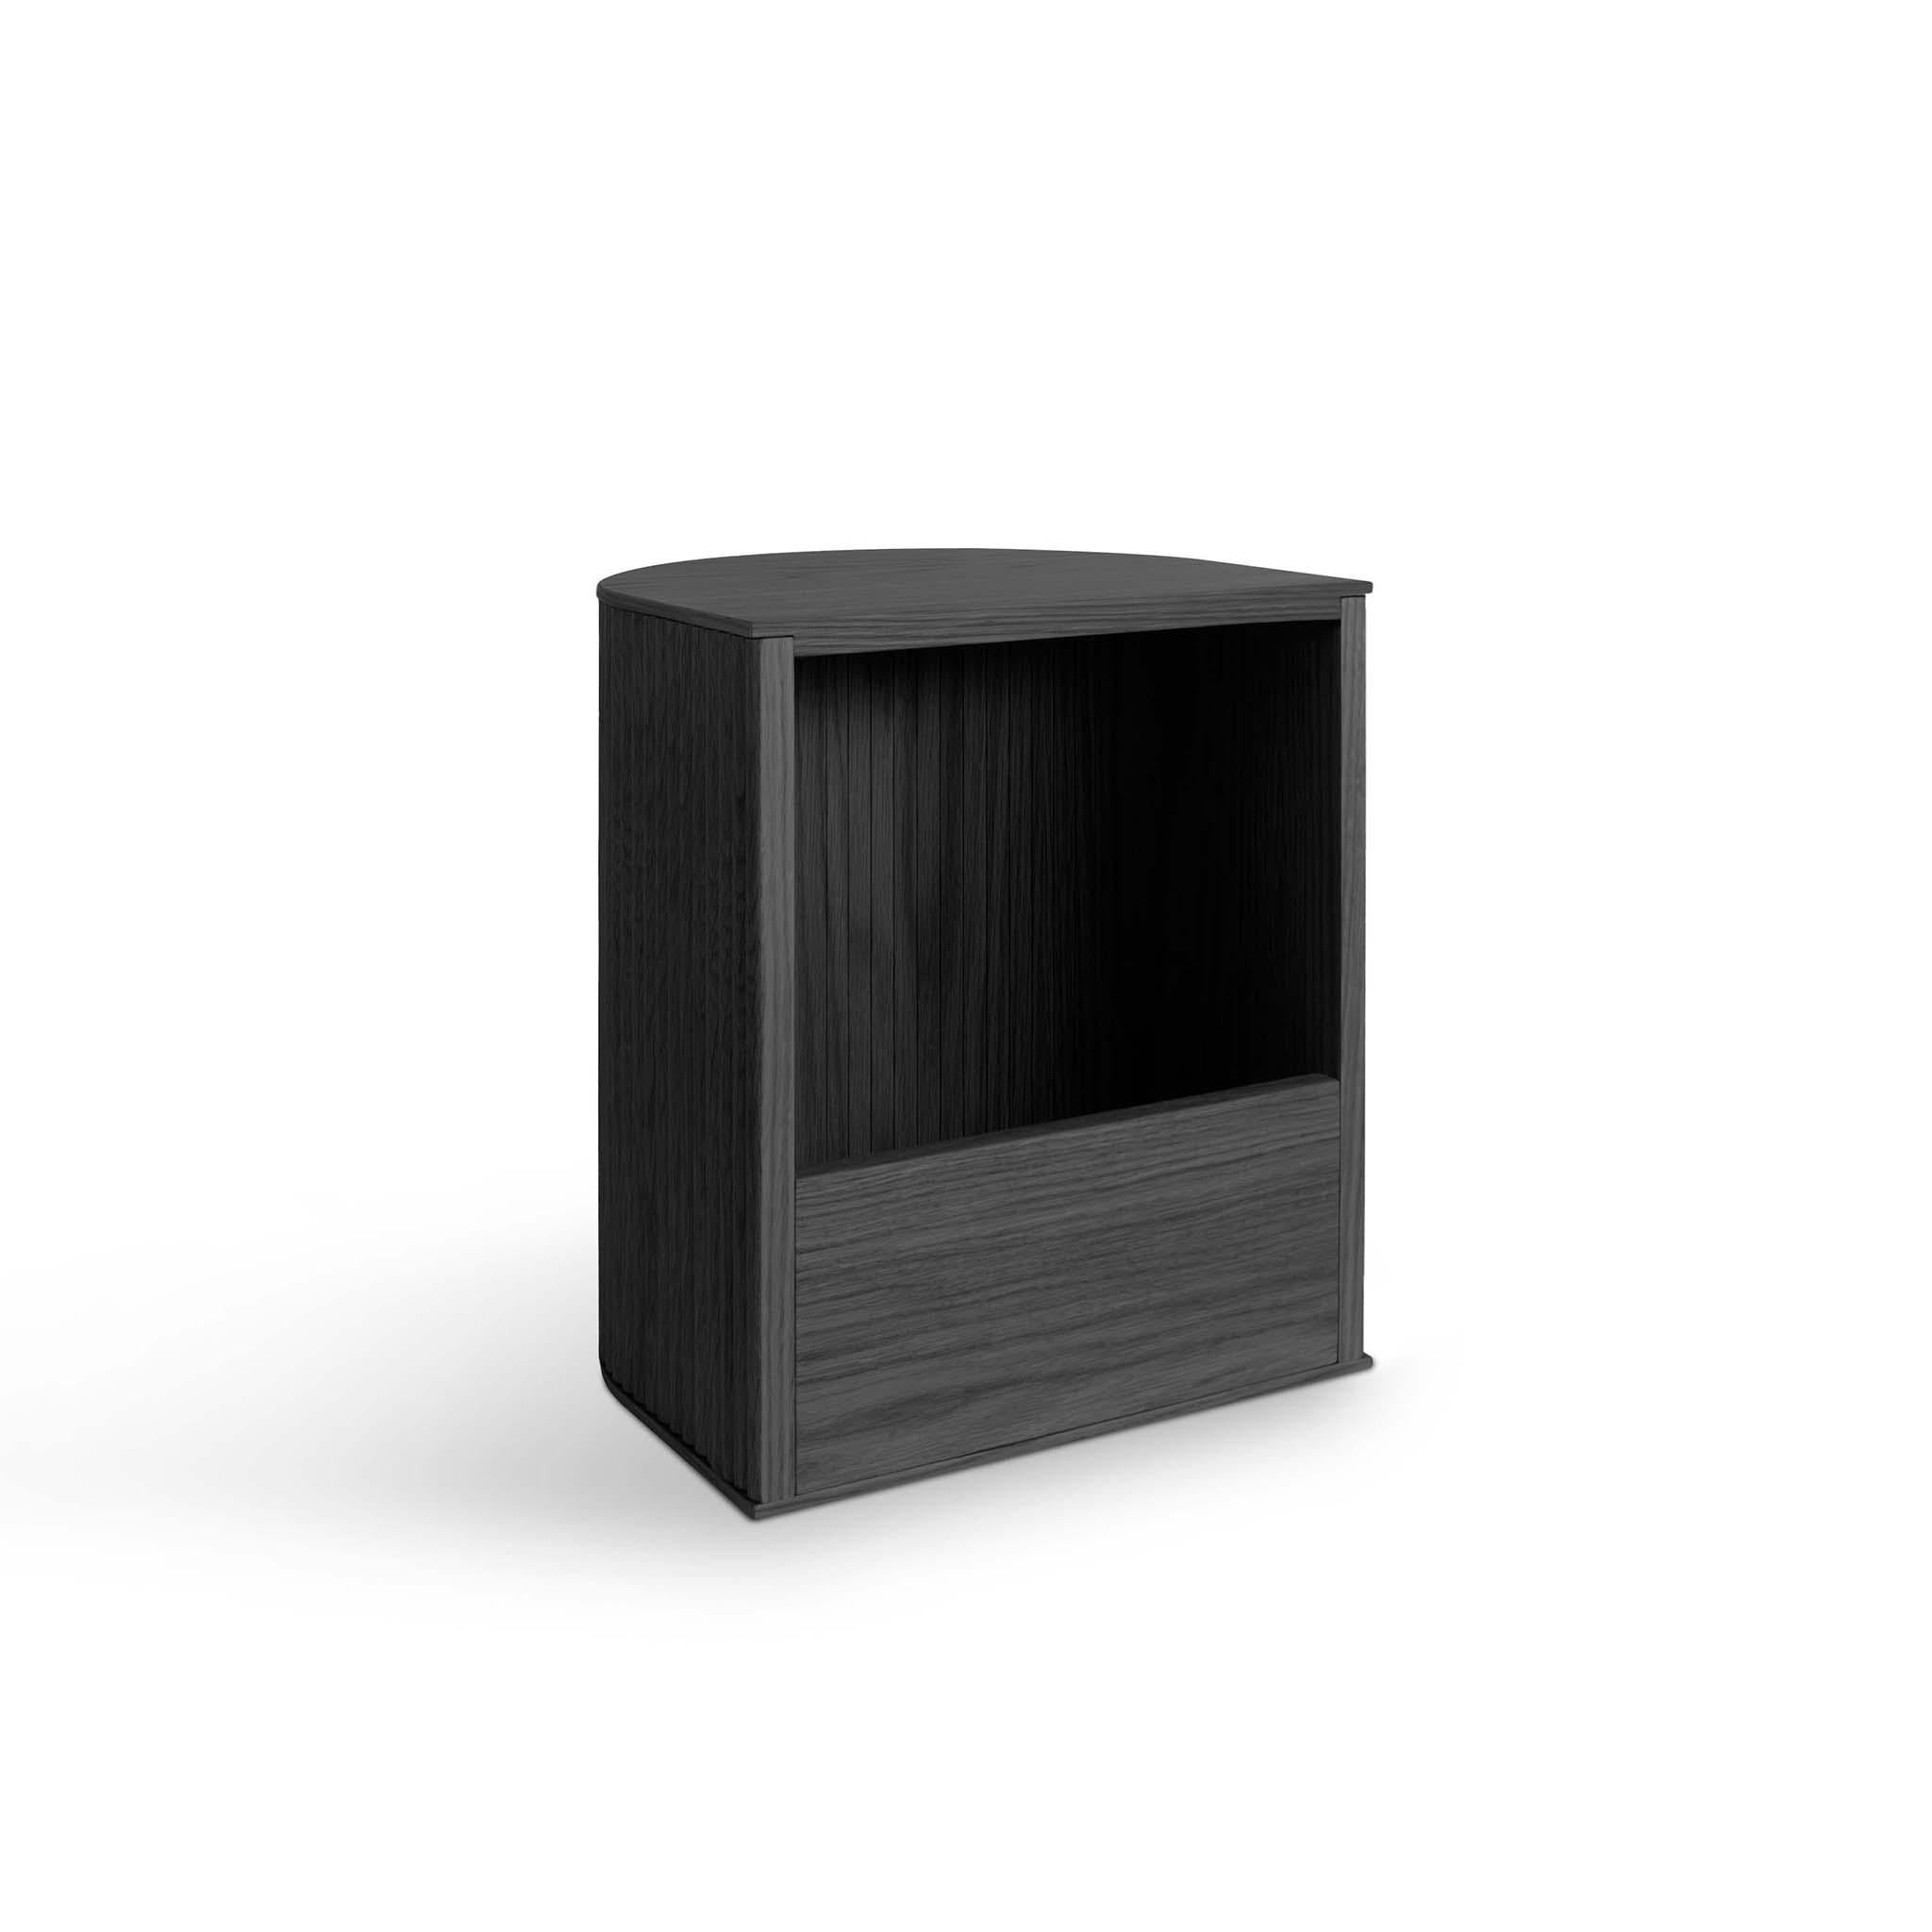 Minimalist Duna shifting stool, Black For Sale